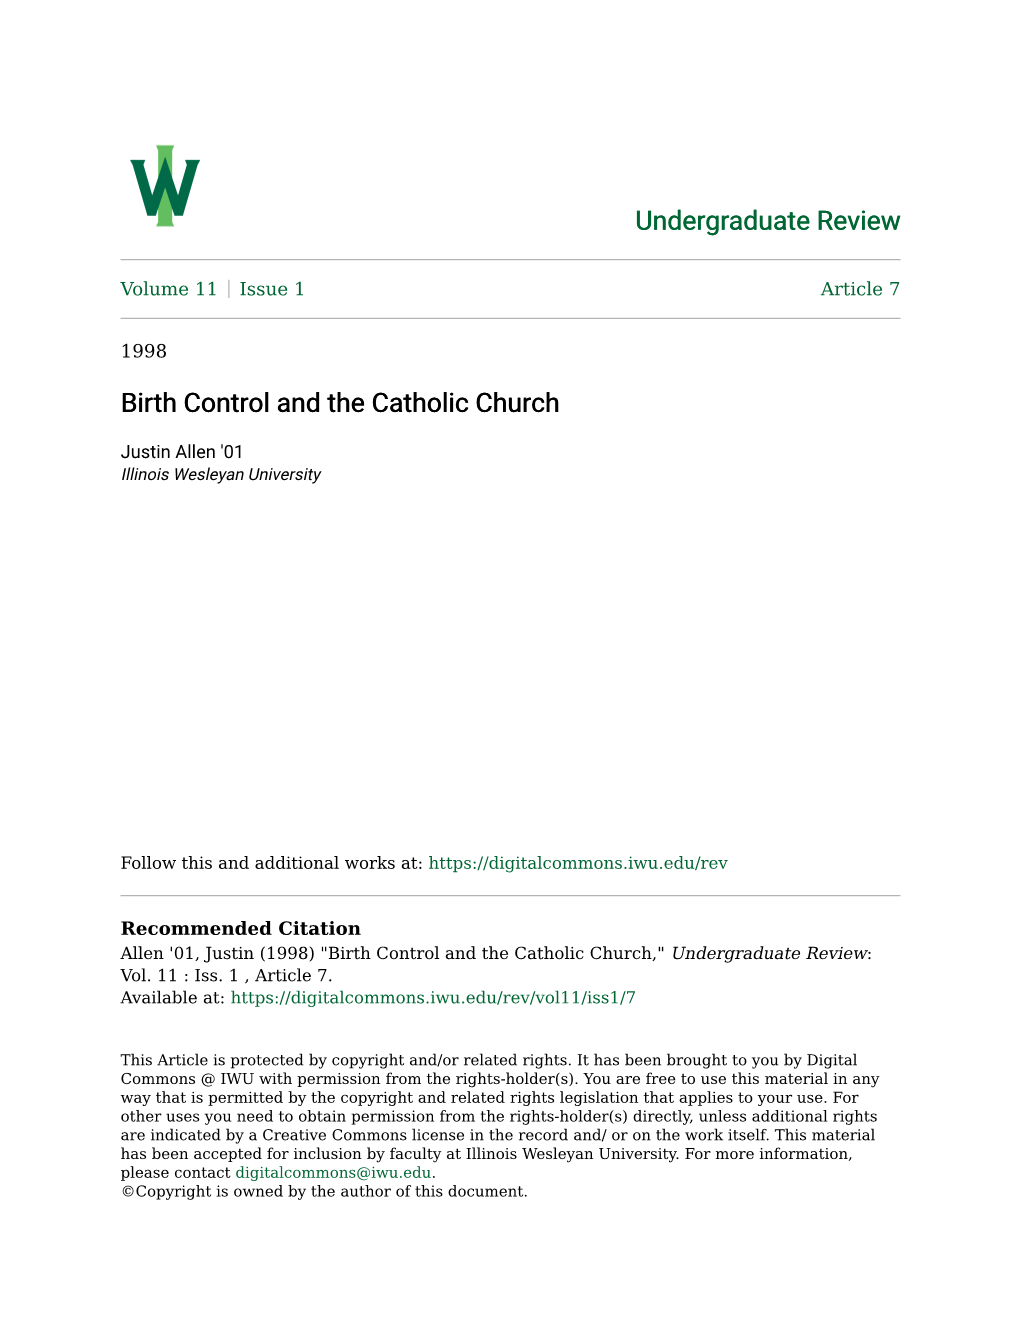 Birth Control and the Catholic Church